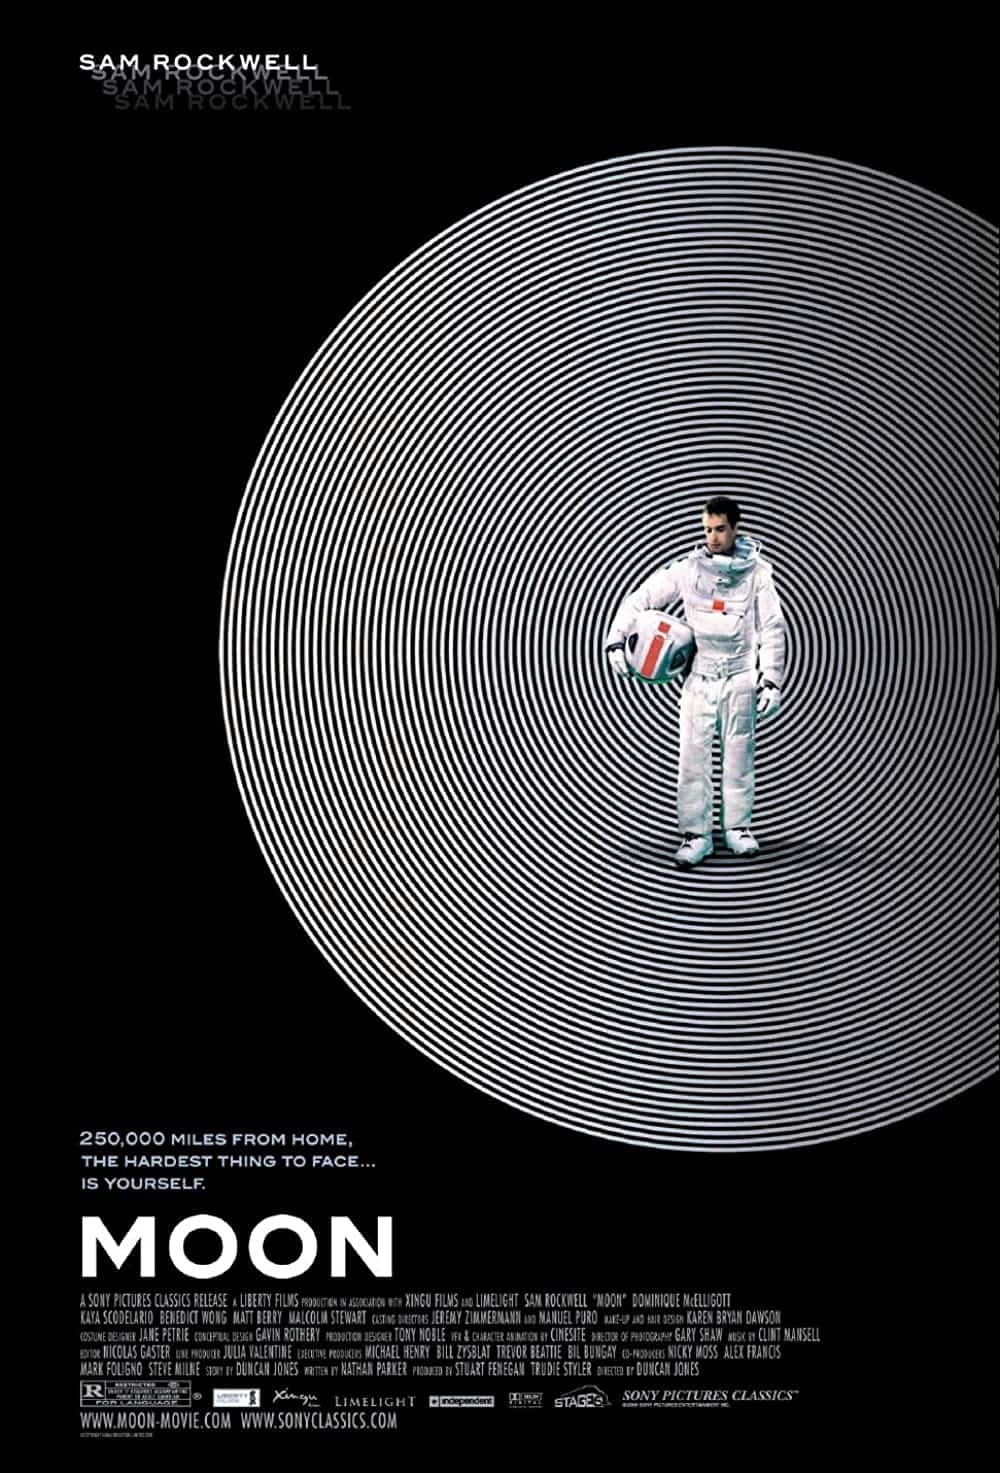 Moon (2009) Best Movies Like Interstellar